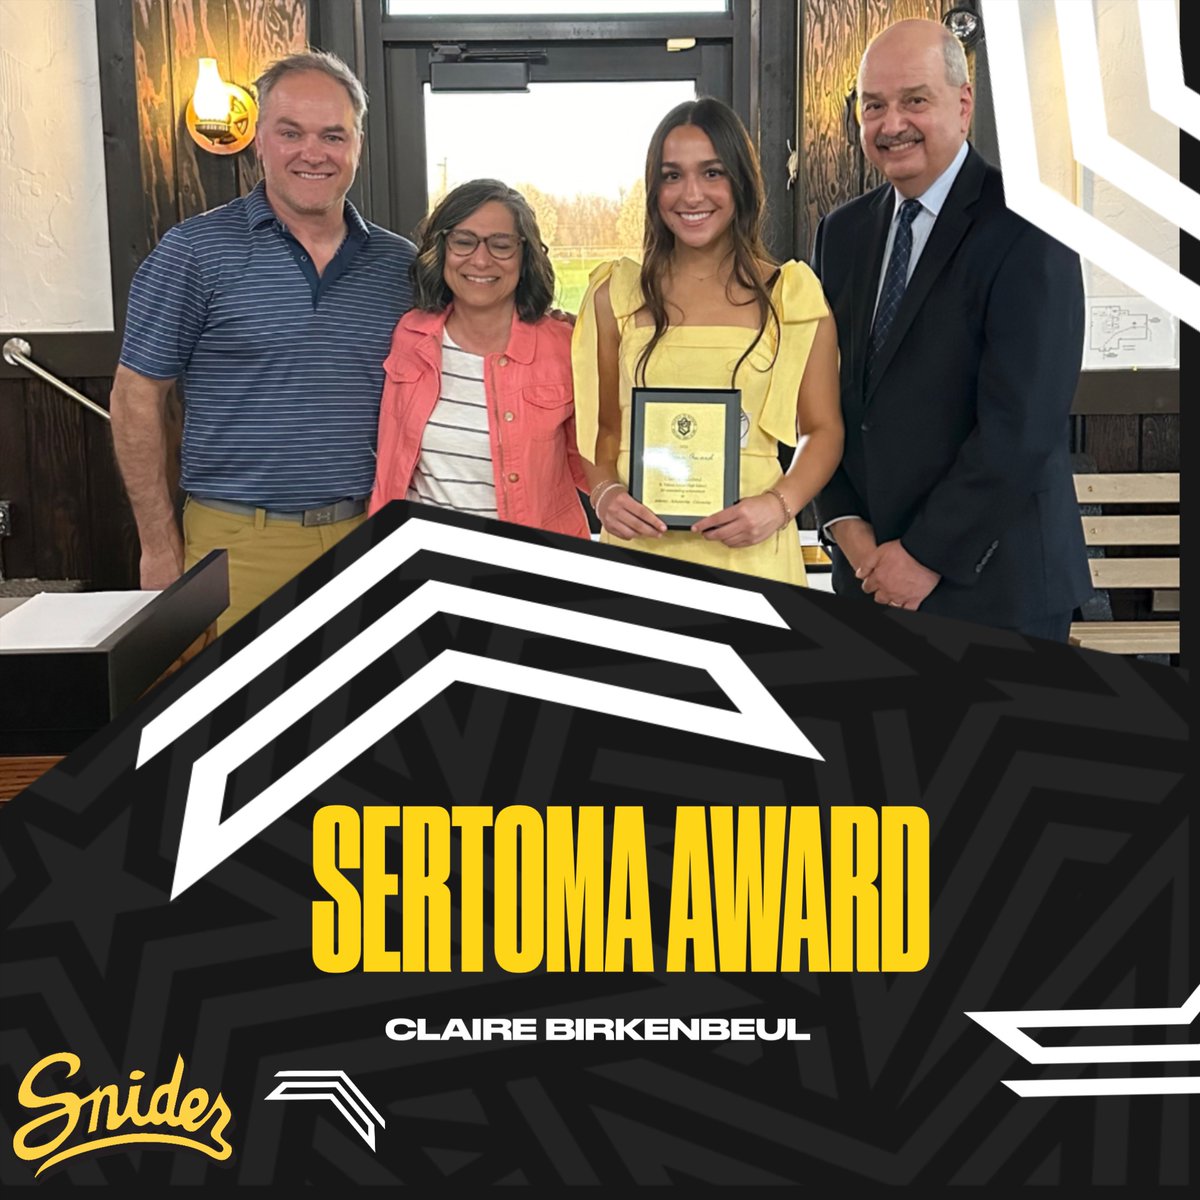 Congratulations to Claire Birkenbeul, the 2024 winner of the Sertoma Award representing Snider High School.